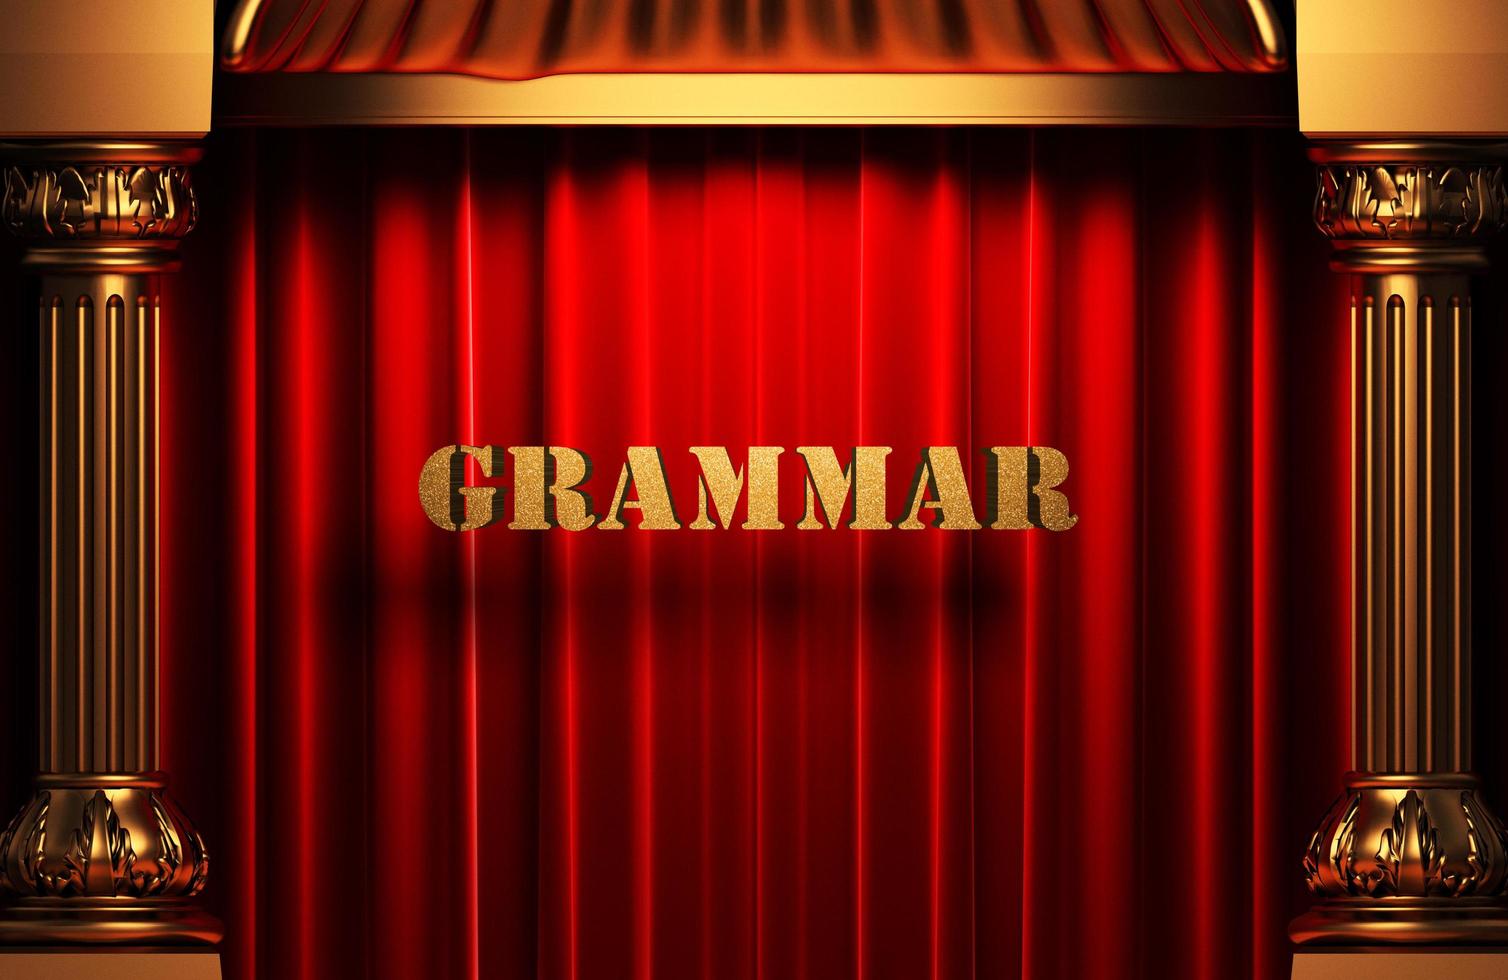 gramática palabra dorada en cortina roja foto